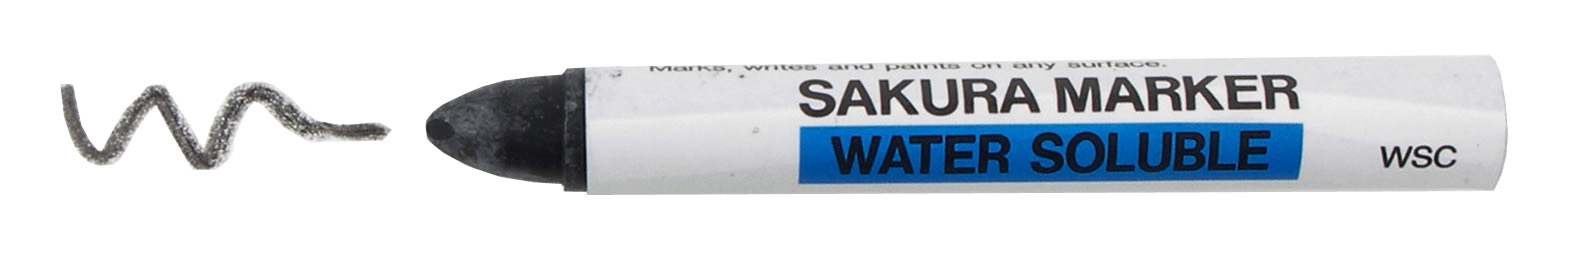 Sakura Water Soluble Industrial Crayon Marker, Black White Red Marking  Crayons